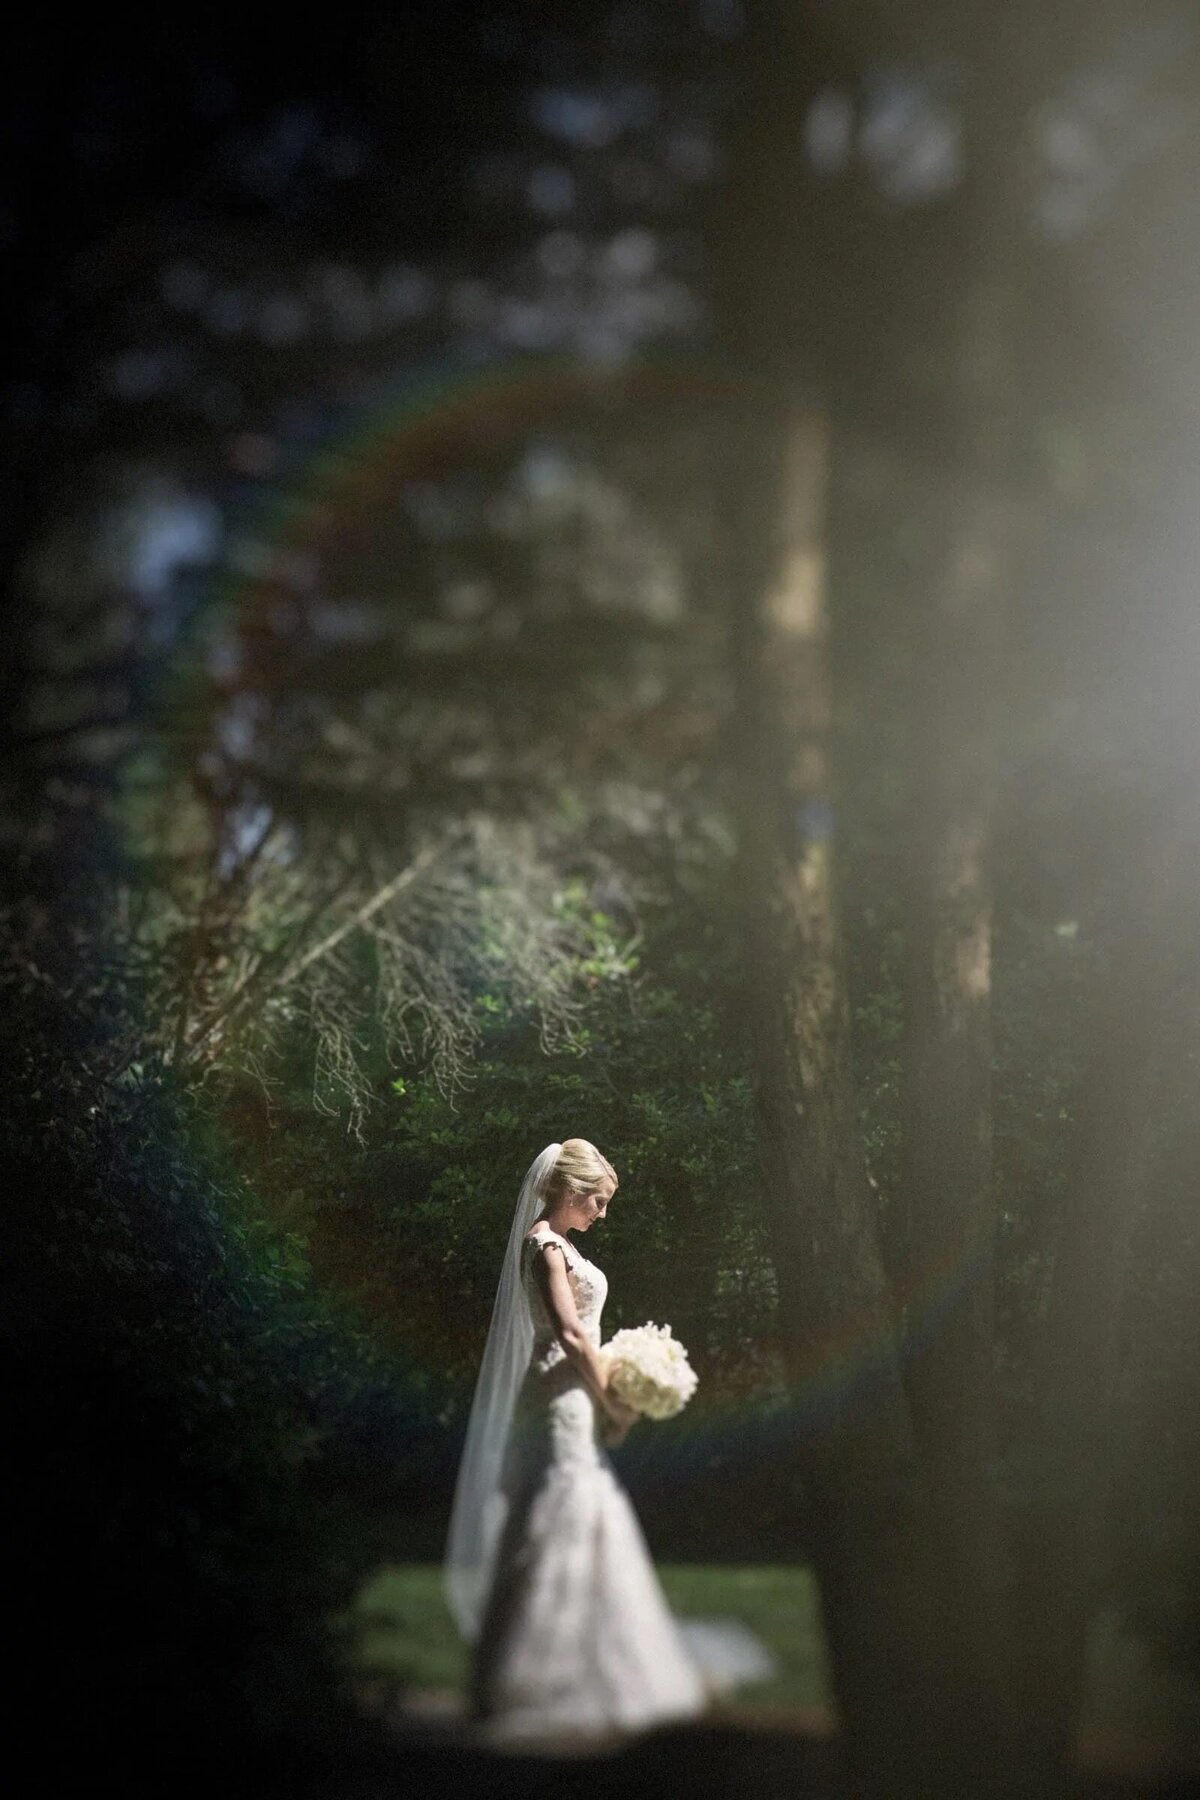 Sun filtering through trees onto a bride holding a bouquet